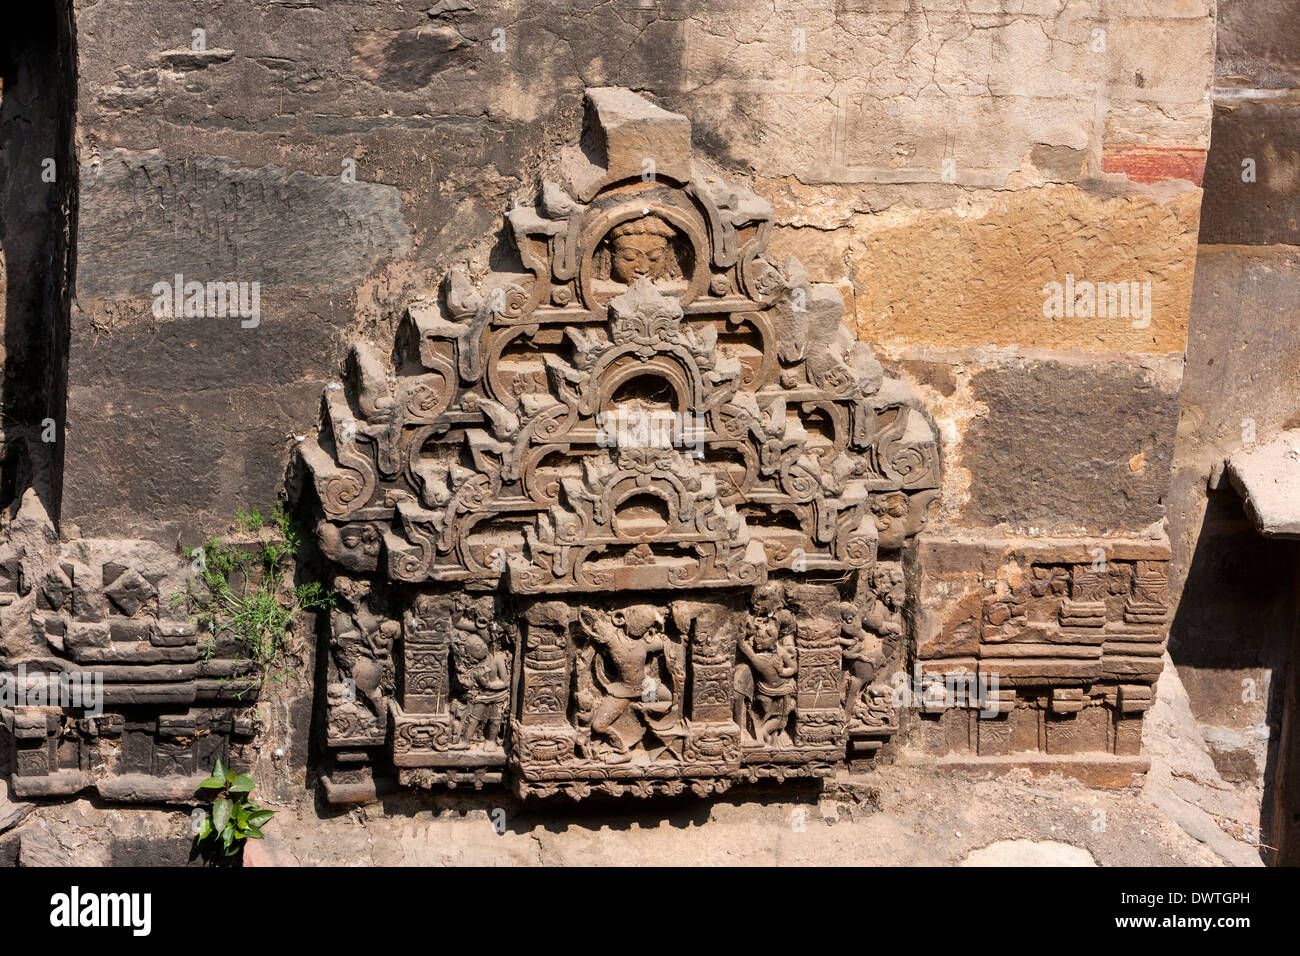 Komplizierte Steinschnitt des hinduistischen Motiven, Chand Baori Schritt gut, Abhaneri Dorf, Rajasthan, Indien. Gebauten 800-900A.D. Stockfoto